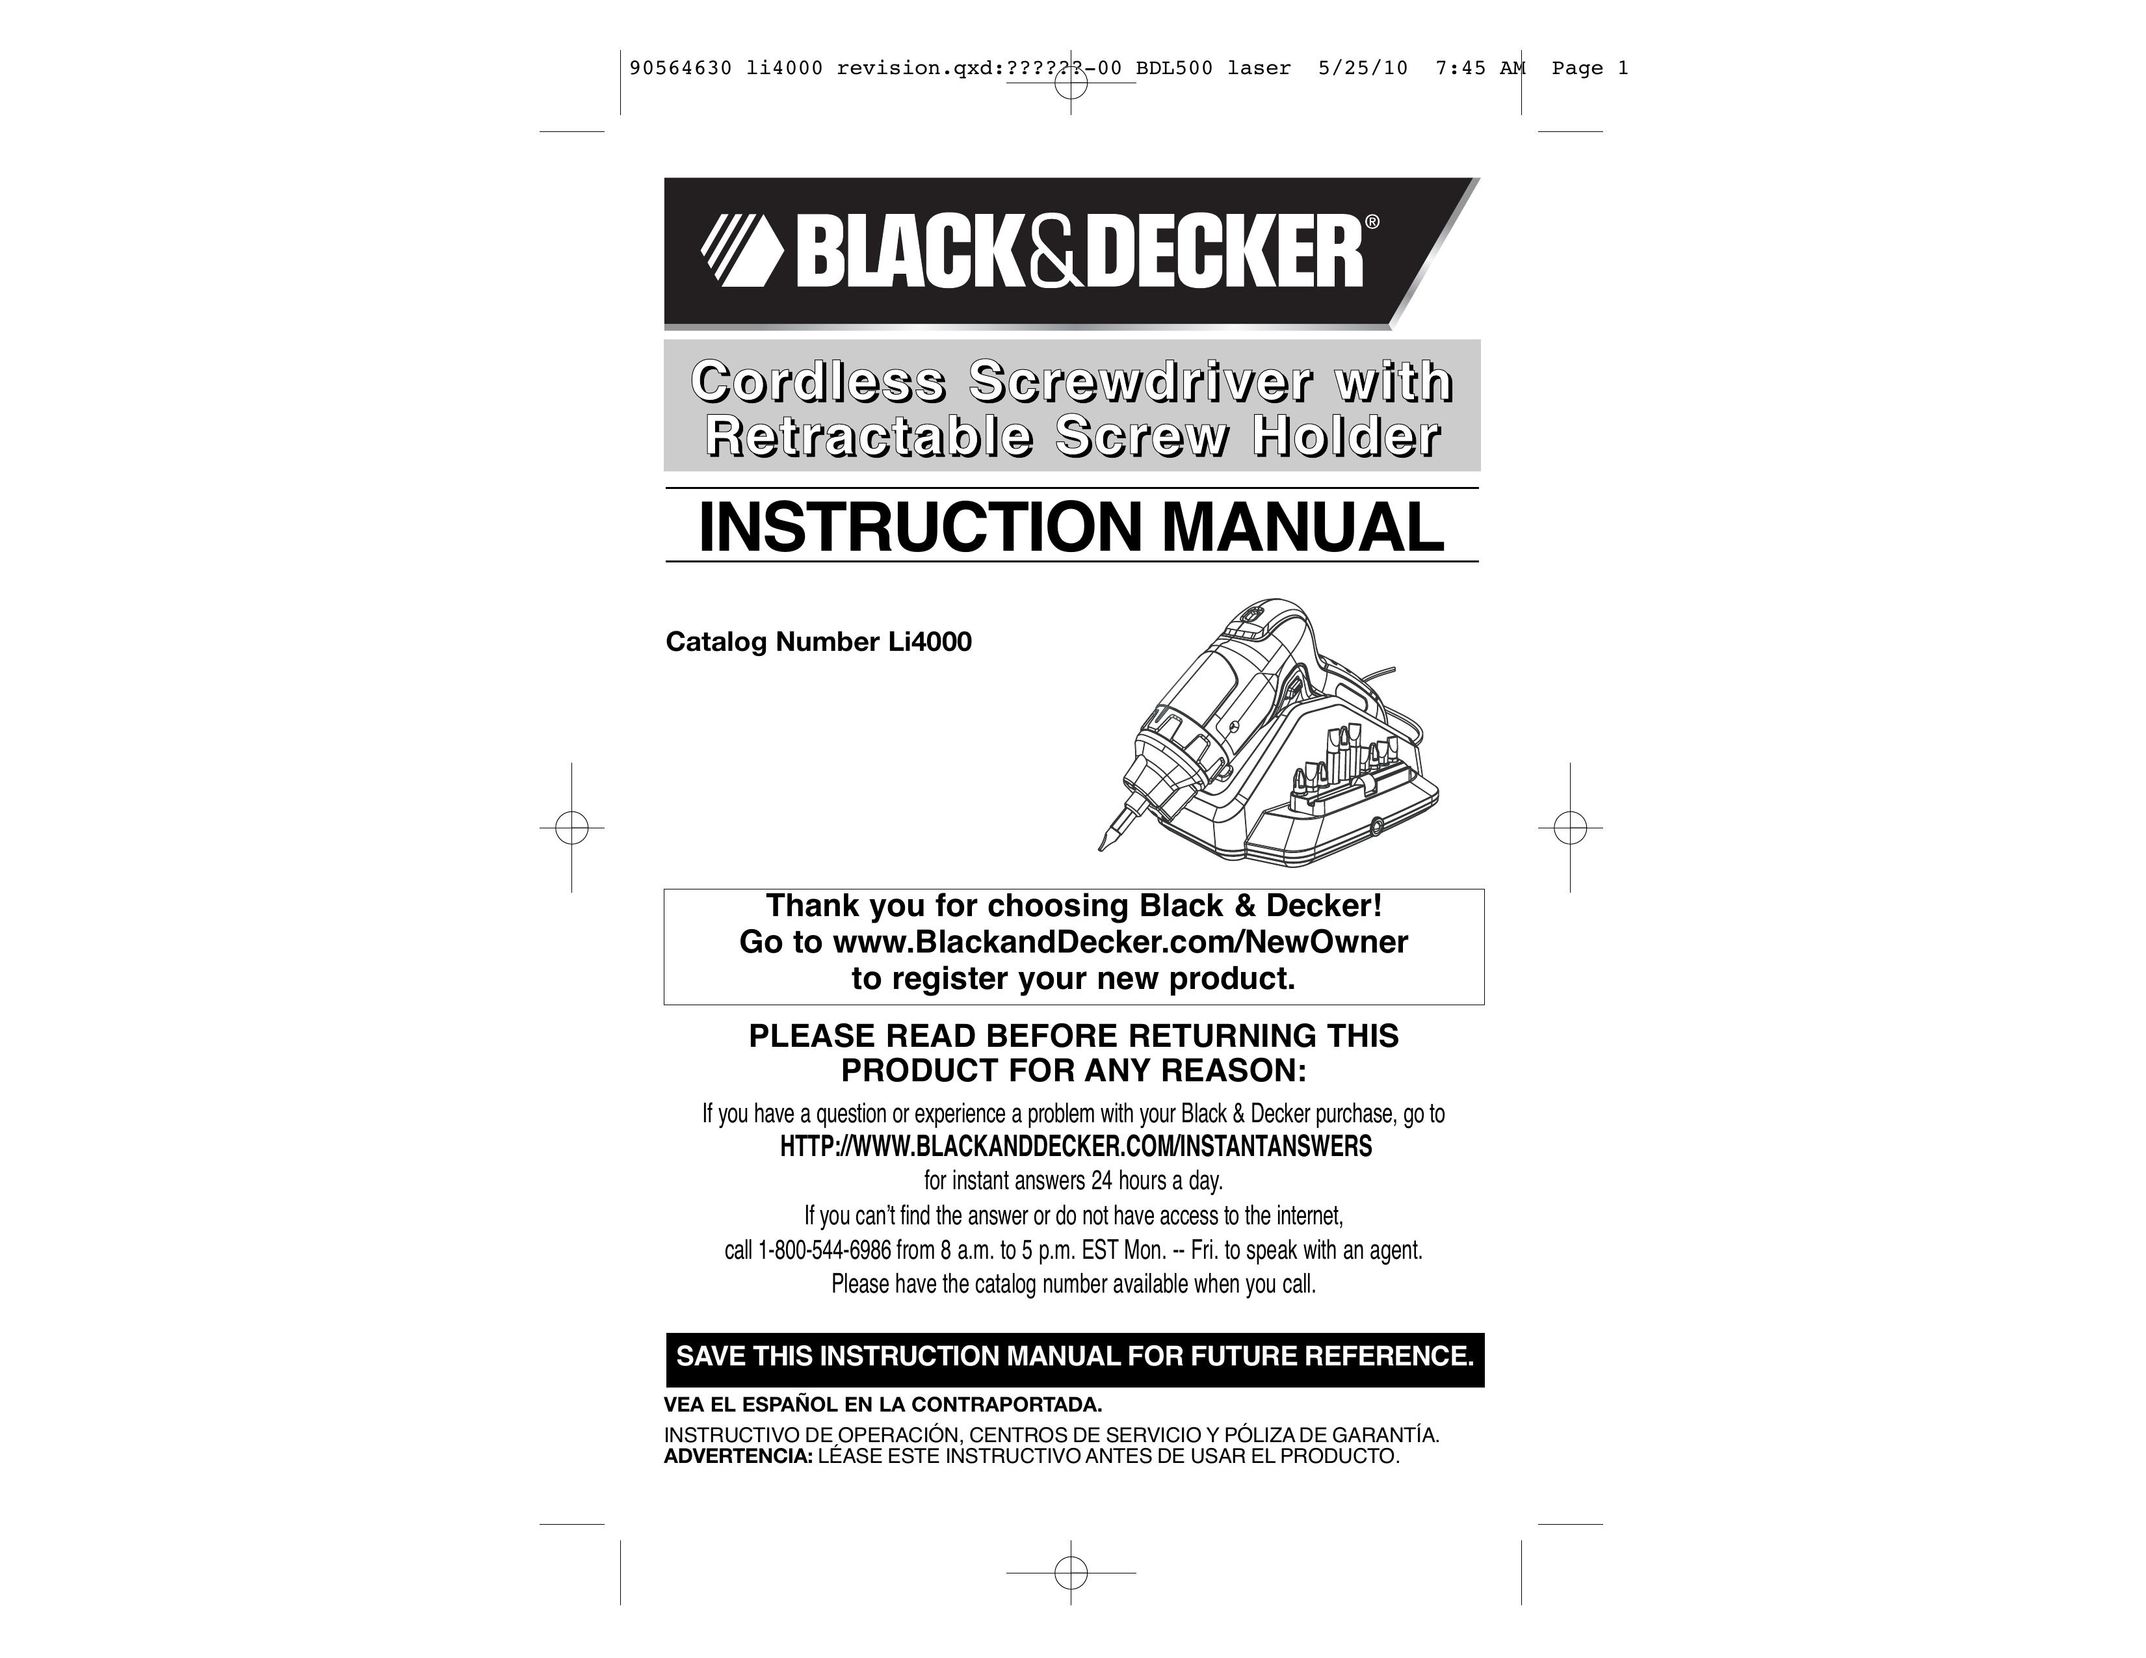 Black & Decker 90564630 Power Screwdriver User Manual